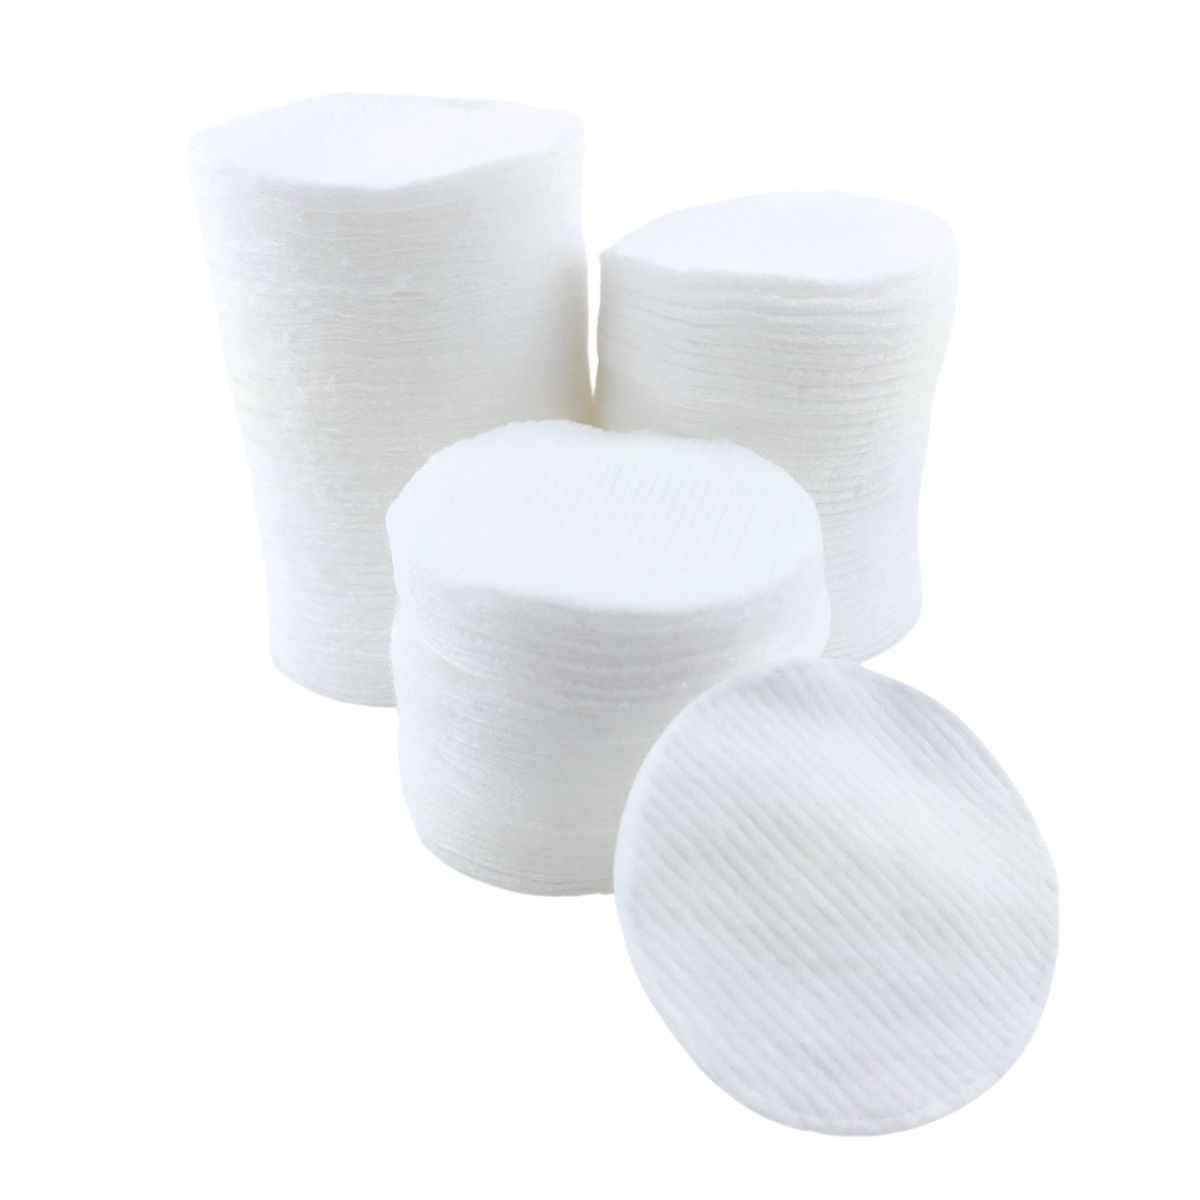 Round Cotton Pads - 100 pcs - My Lash Store